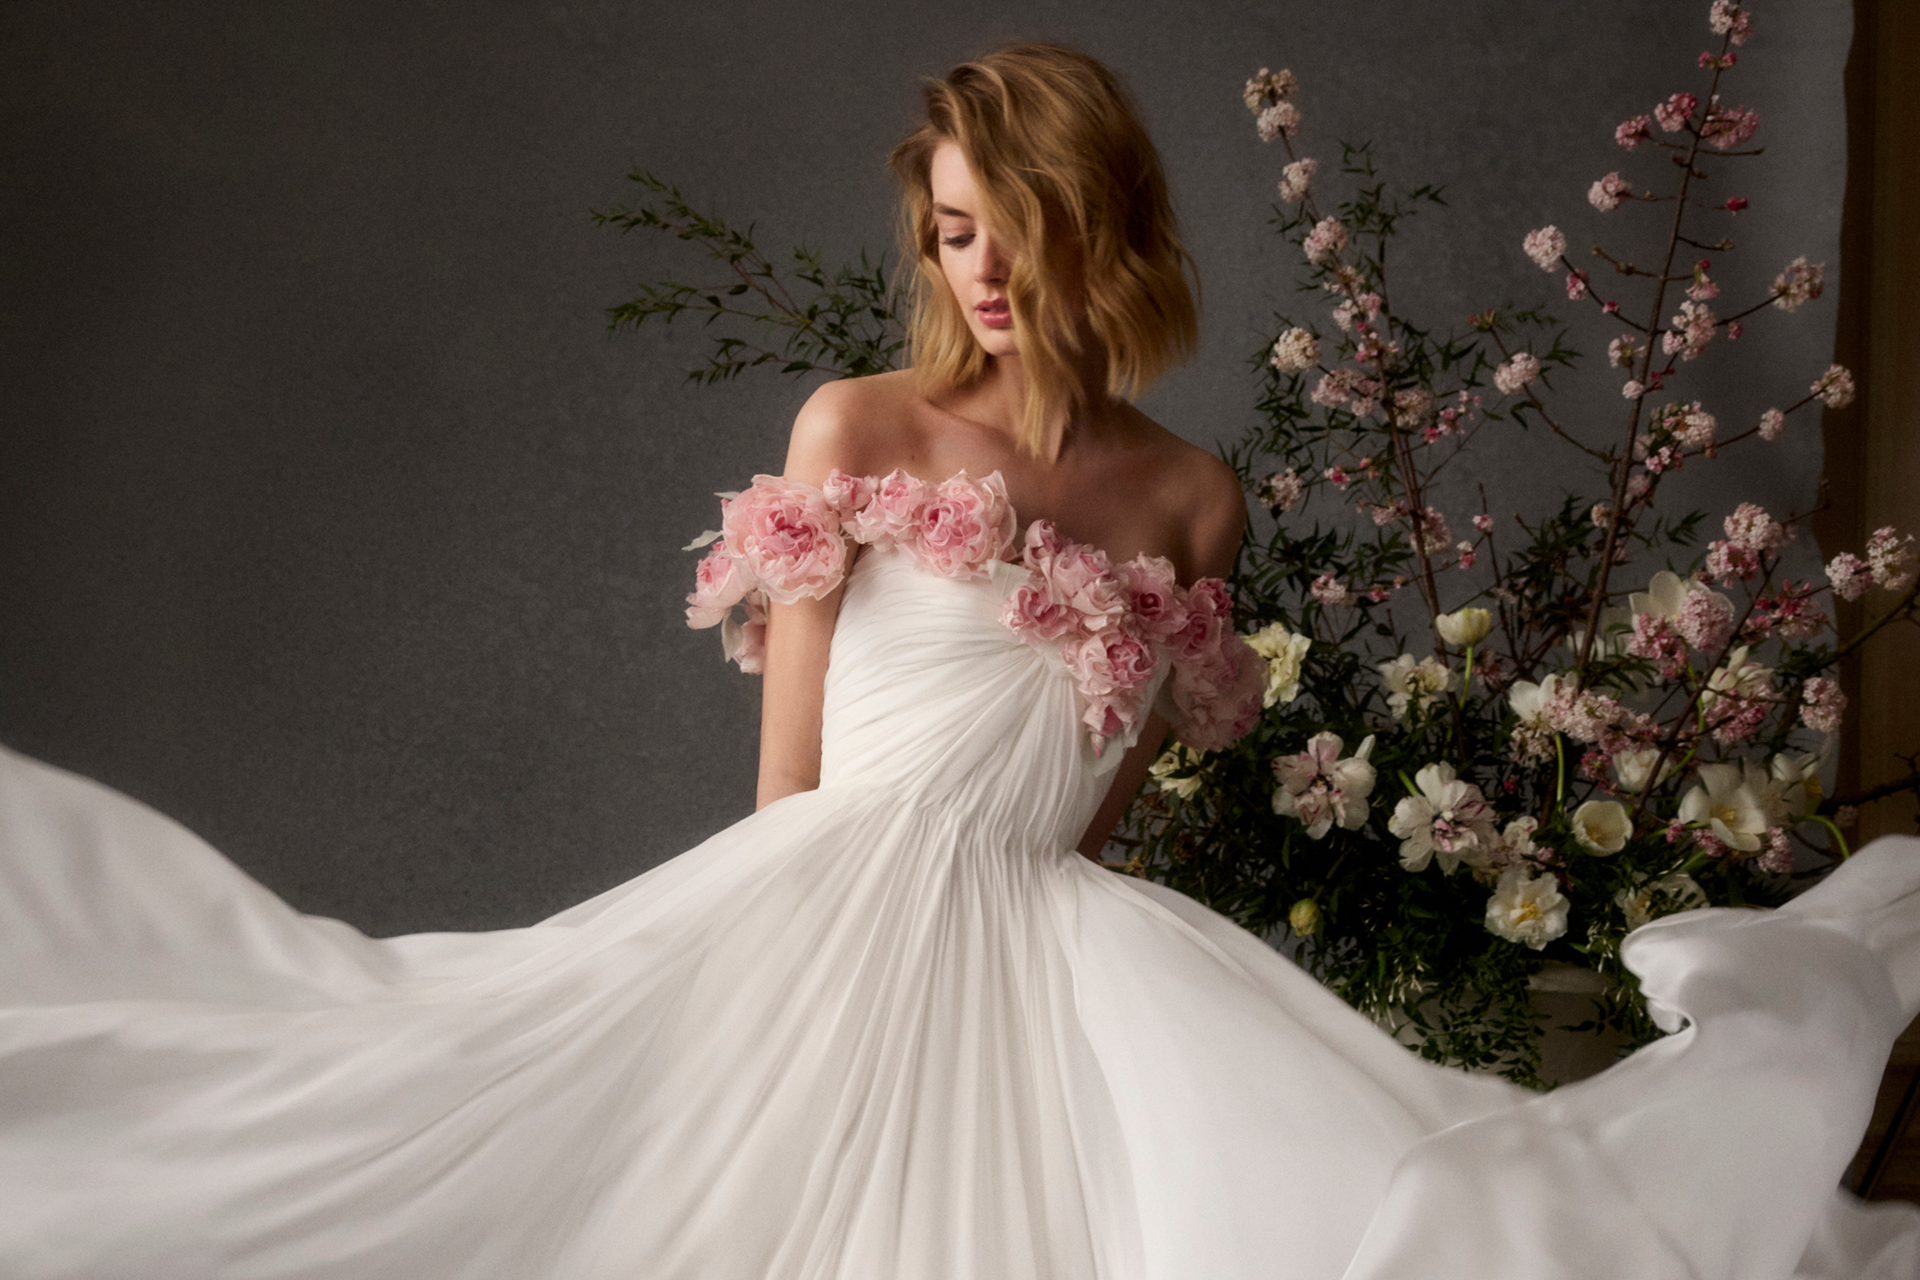 Elegan Evening Dinner Dress Bridal Wedding gown, Women's Fashion